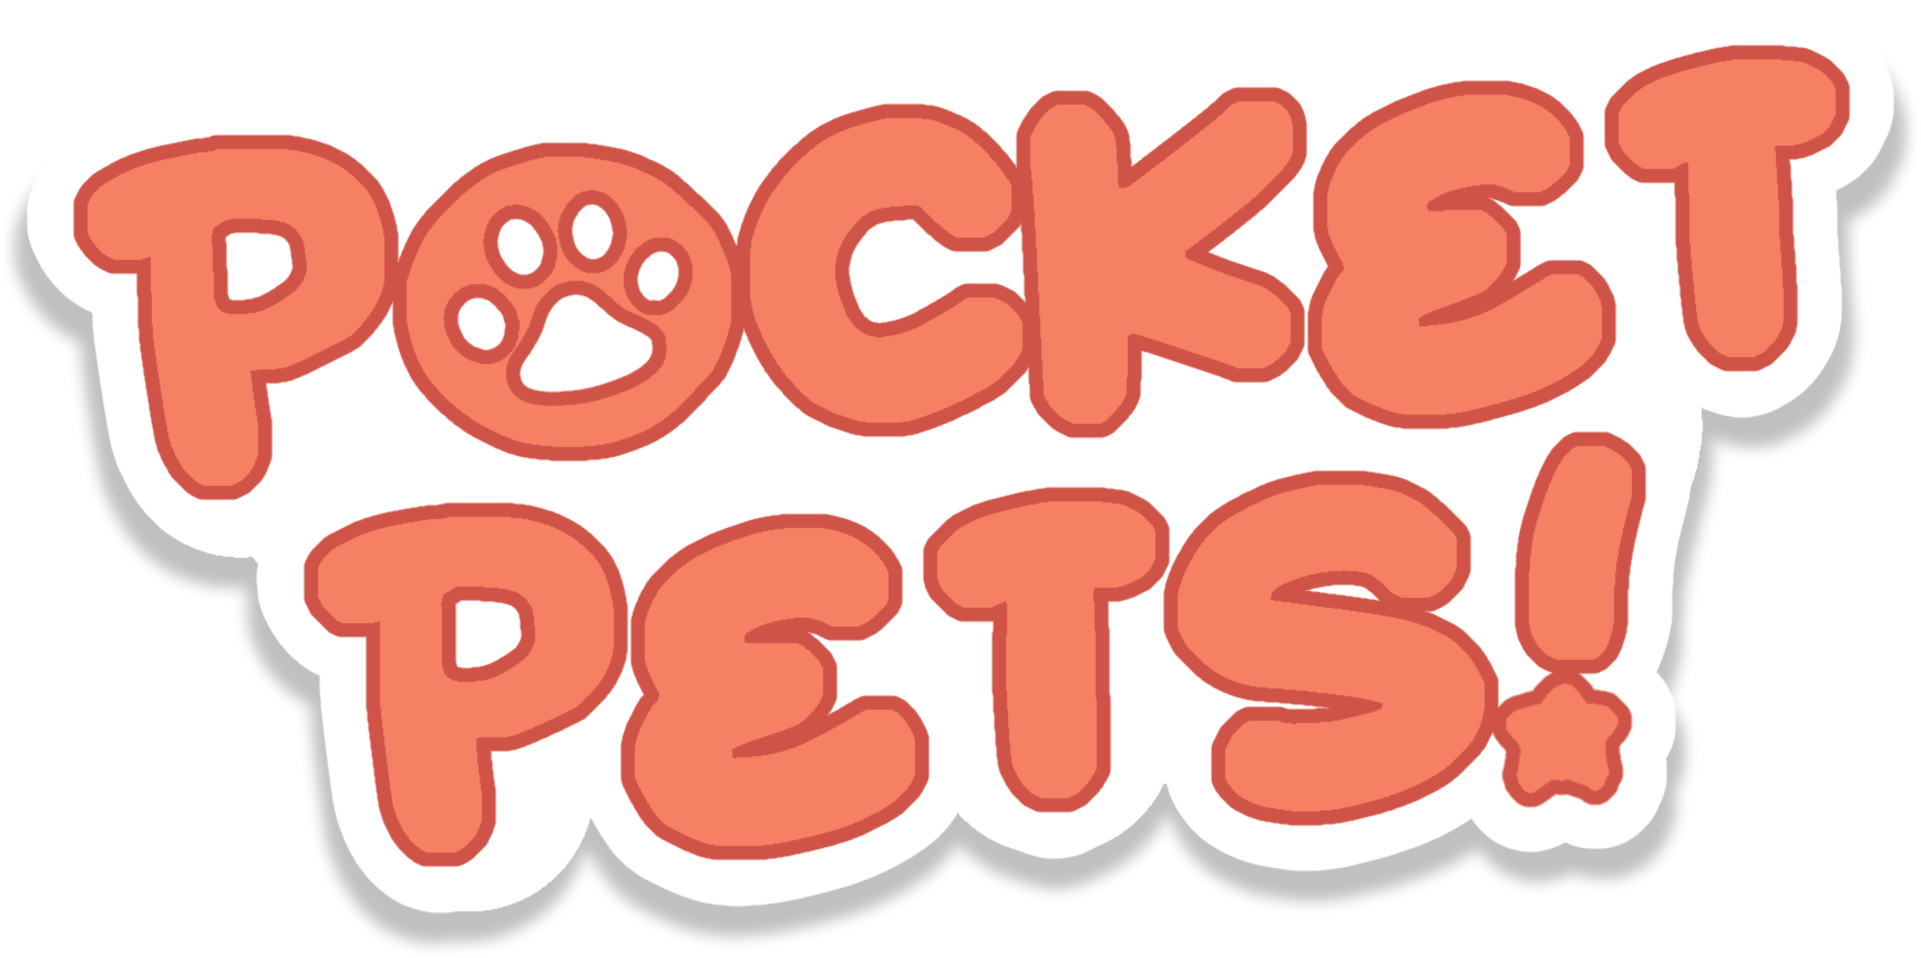 Pocket Pets!